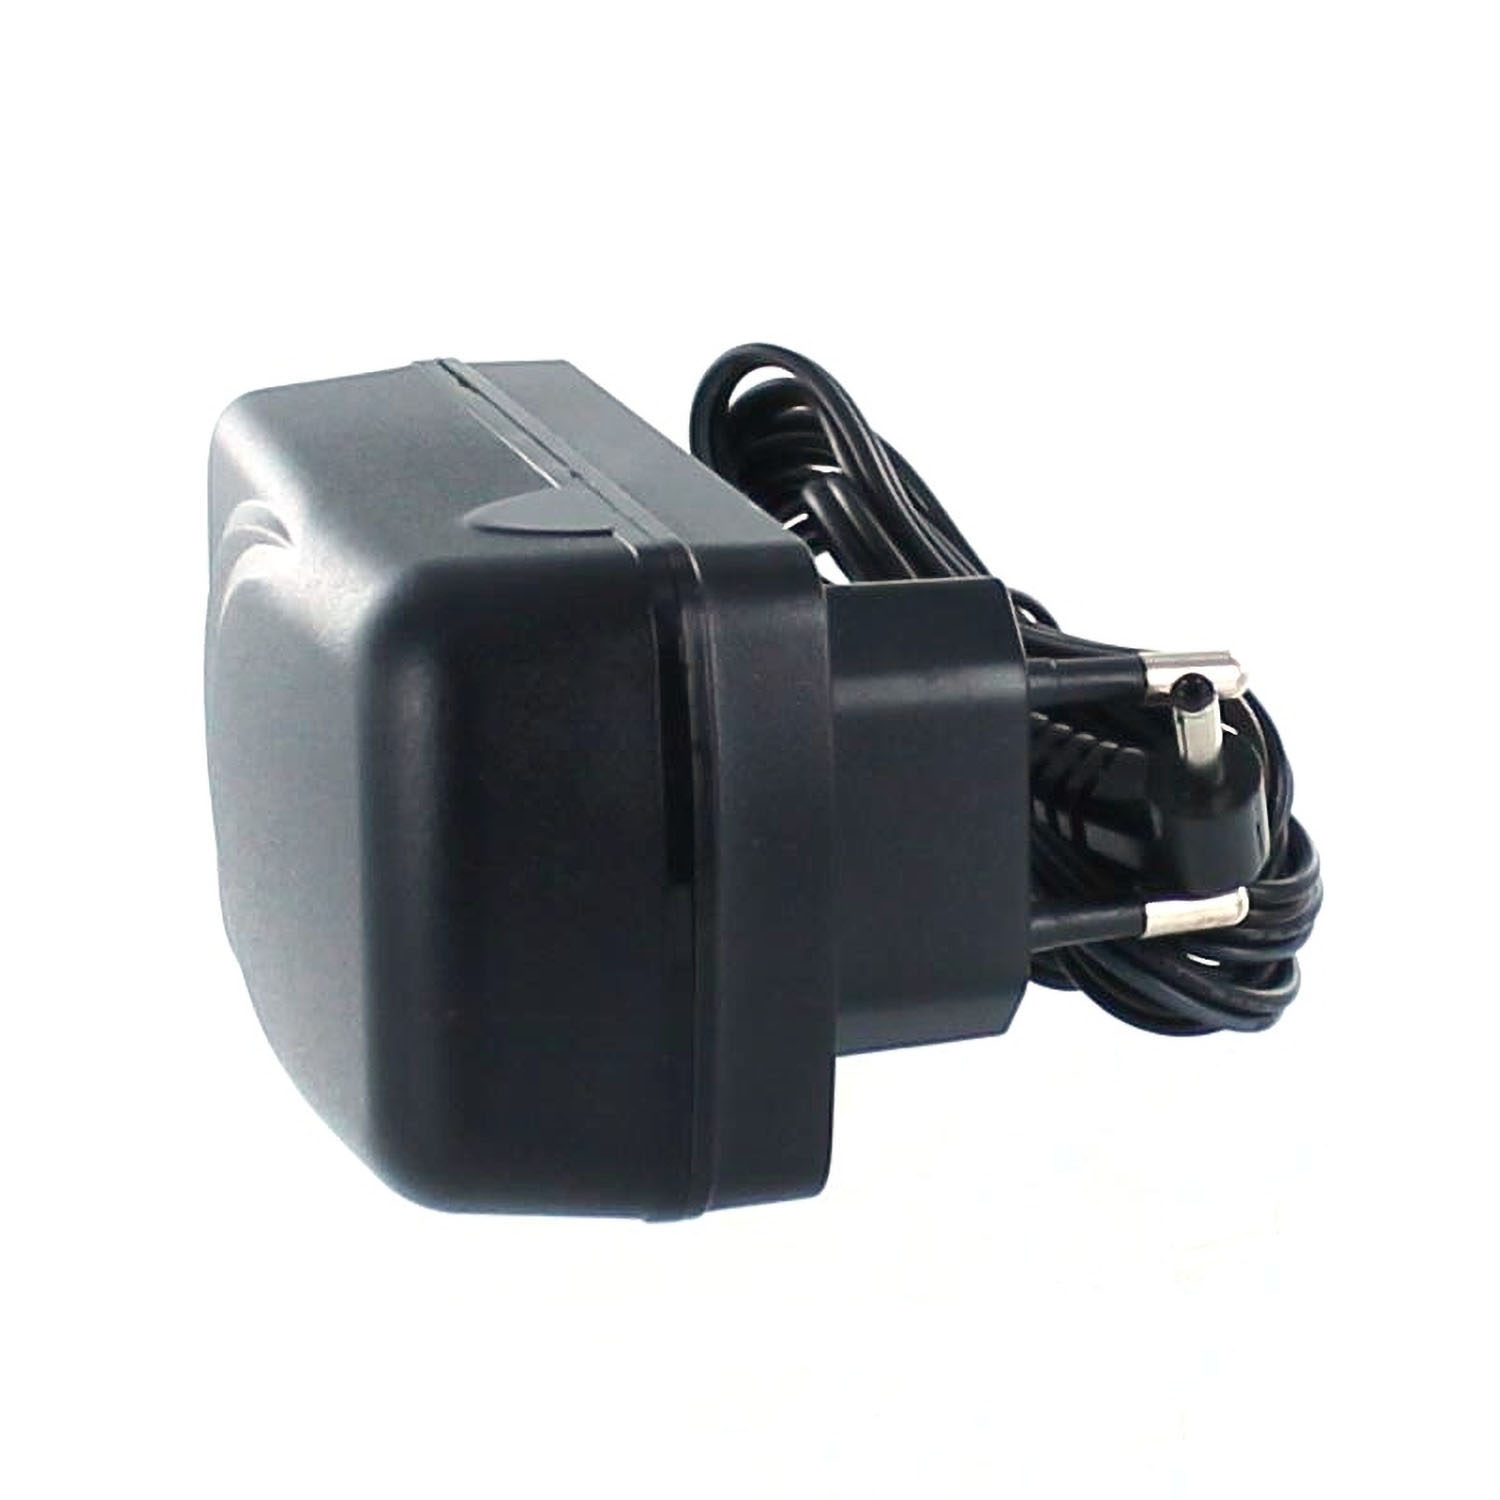 Netzteil kompatibel MV700 Canon, Volt, mit Netzteil/Ladegerät Canon schwarz MOBILOTEC 8.4